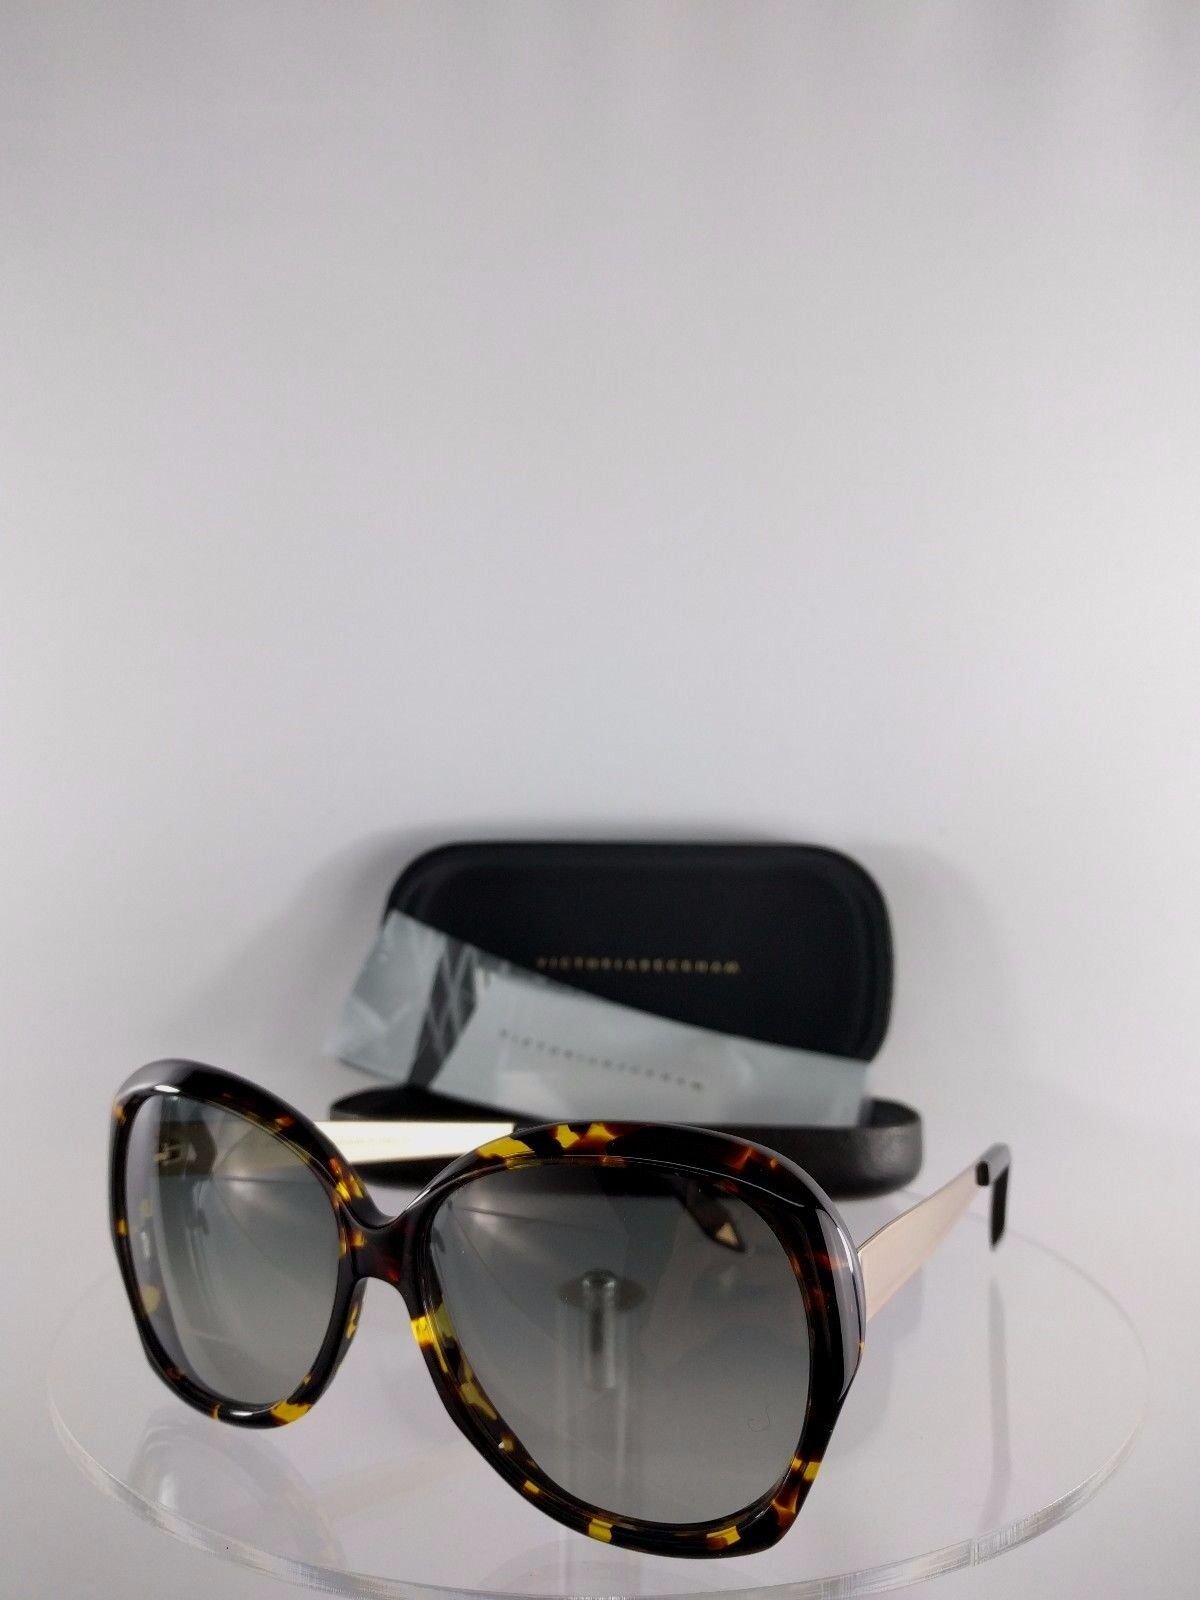 Brand New Authentic Victoria Beckham Sunglasses VBS4 C11 Gold Tortoise Frame